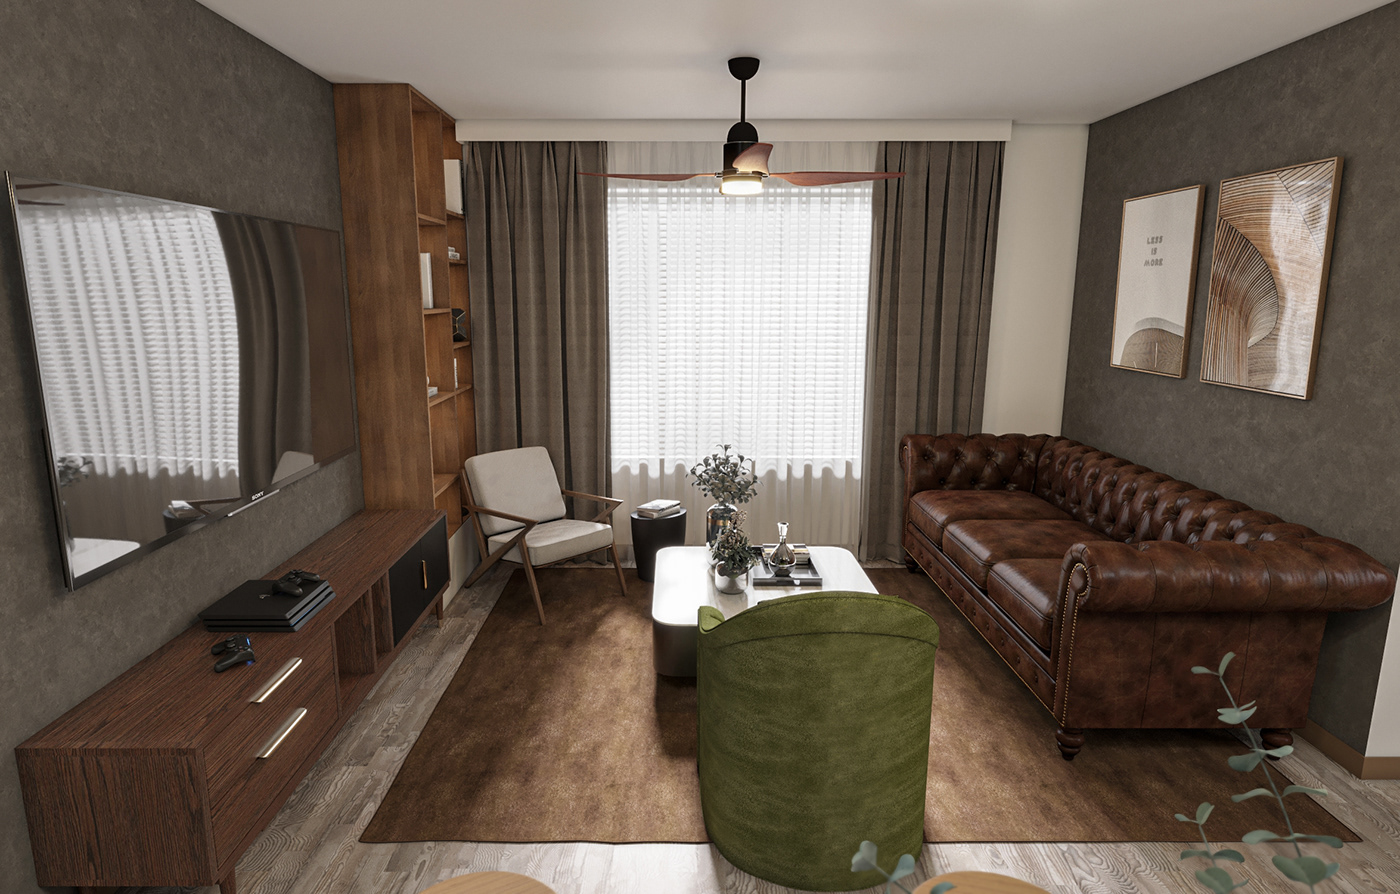 3ds max archviz corona indoor Interior interior design  living room modern renovation visualization